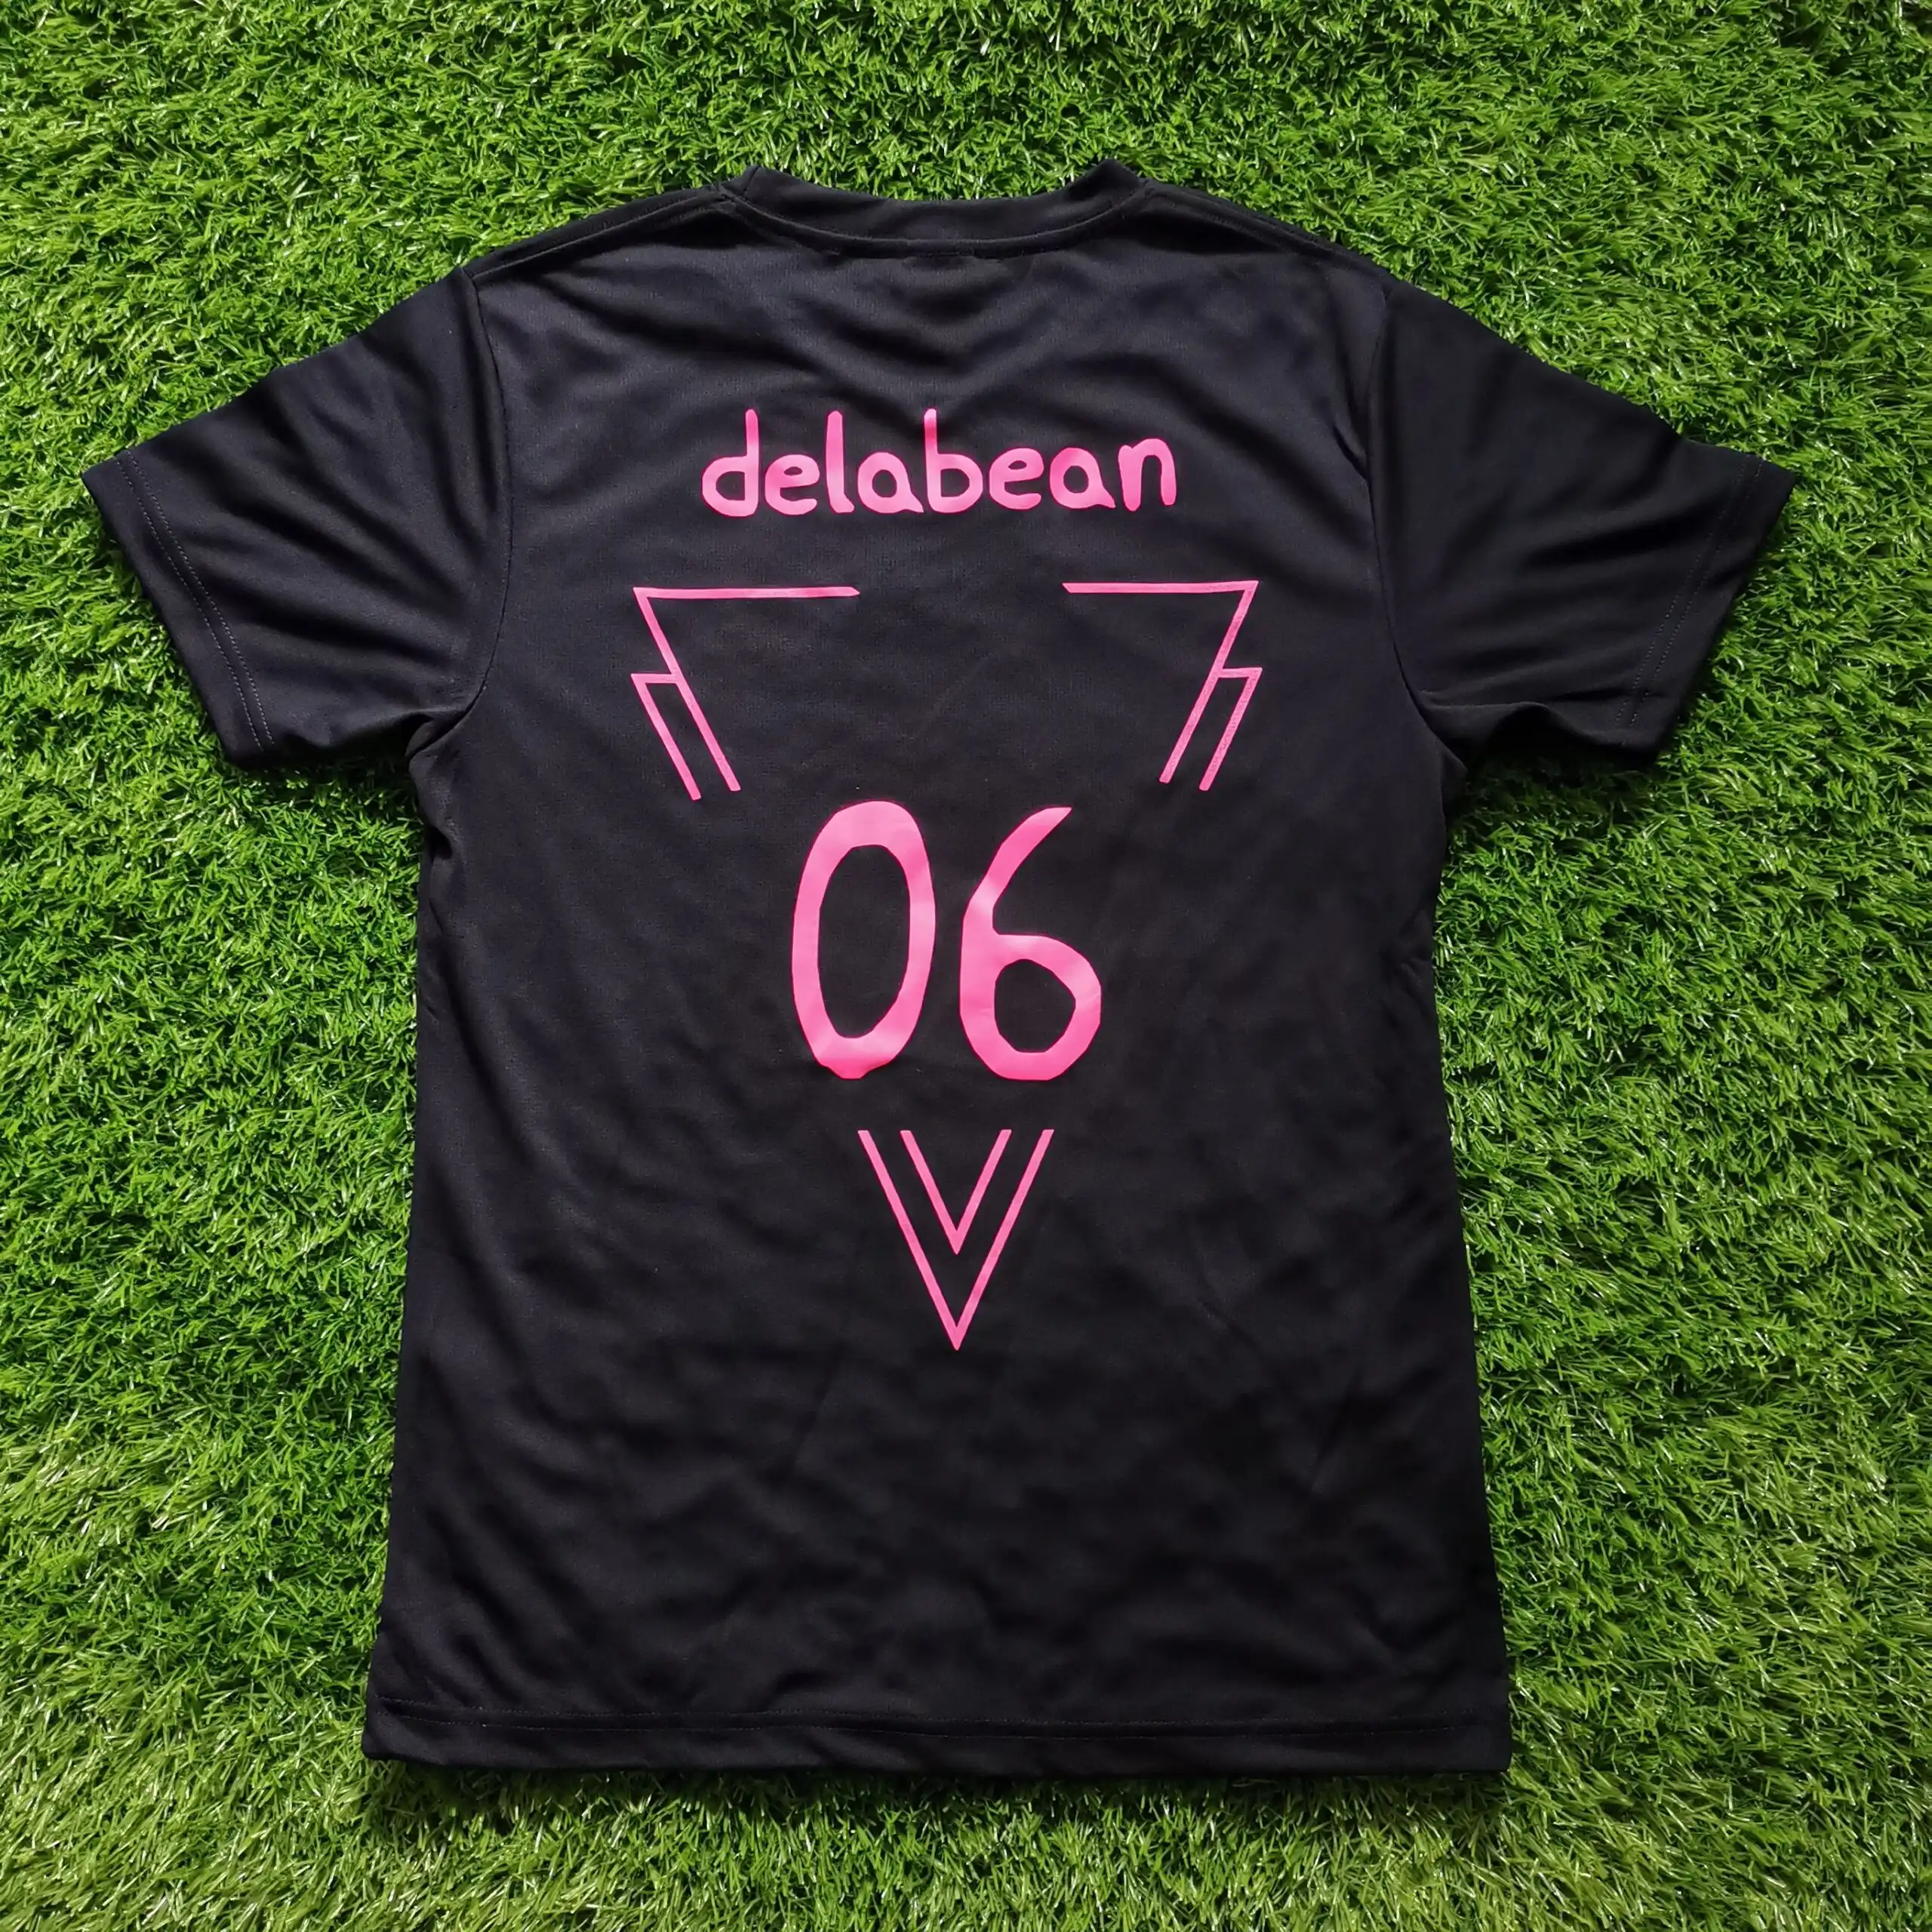 Neon Pink Silkscreen Printing on Black T-Shirt